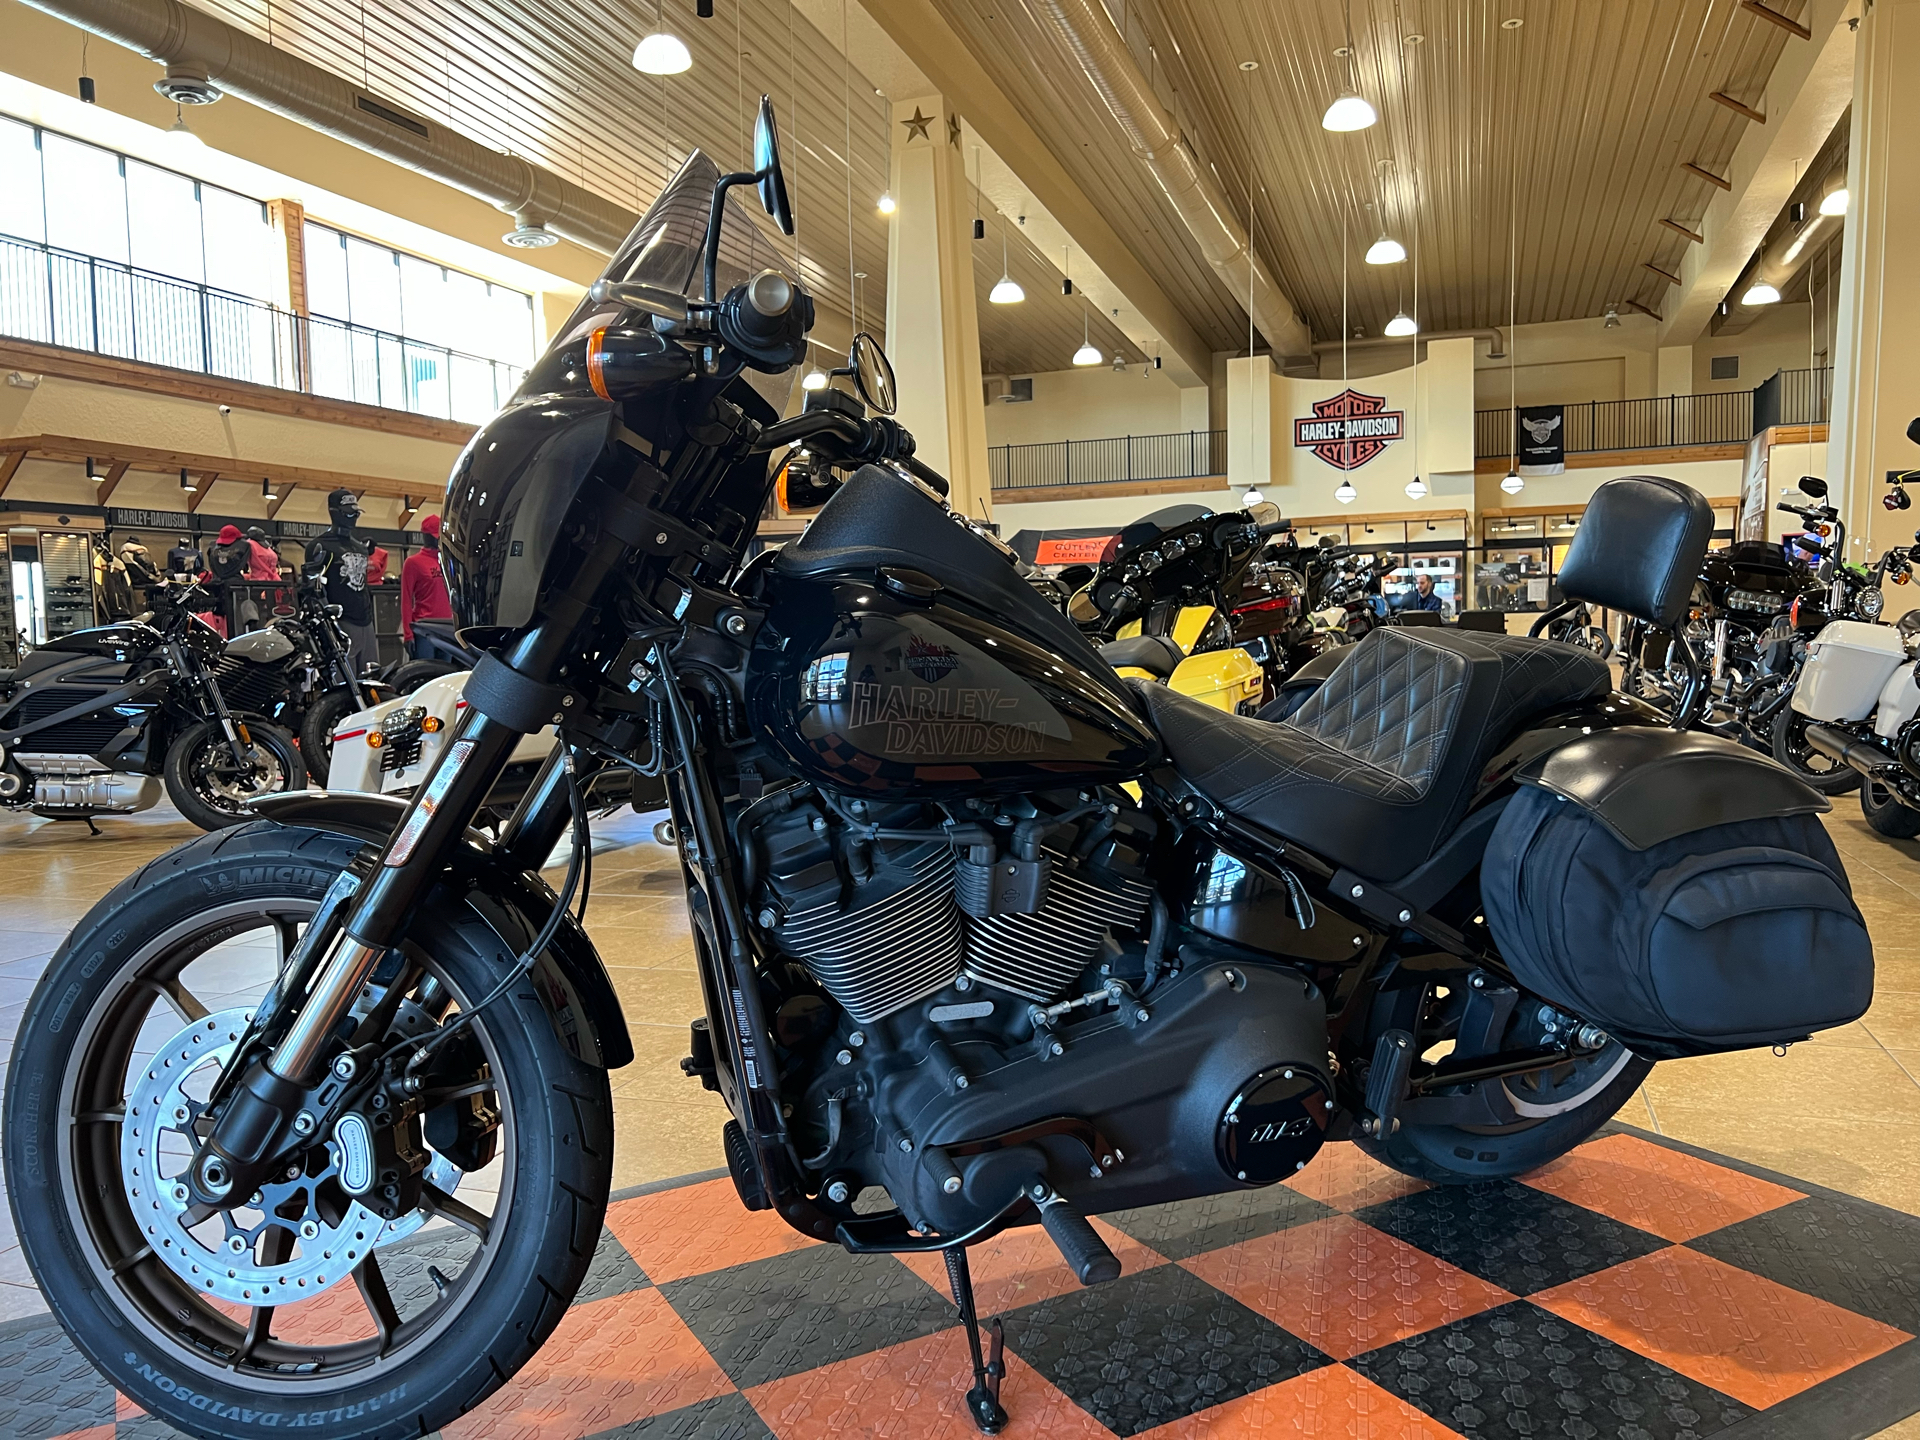 2020 Harley-Davidson Low Rider®S in Pasadena, Texas - Photo 4